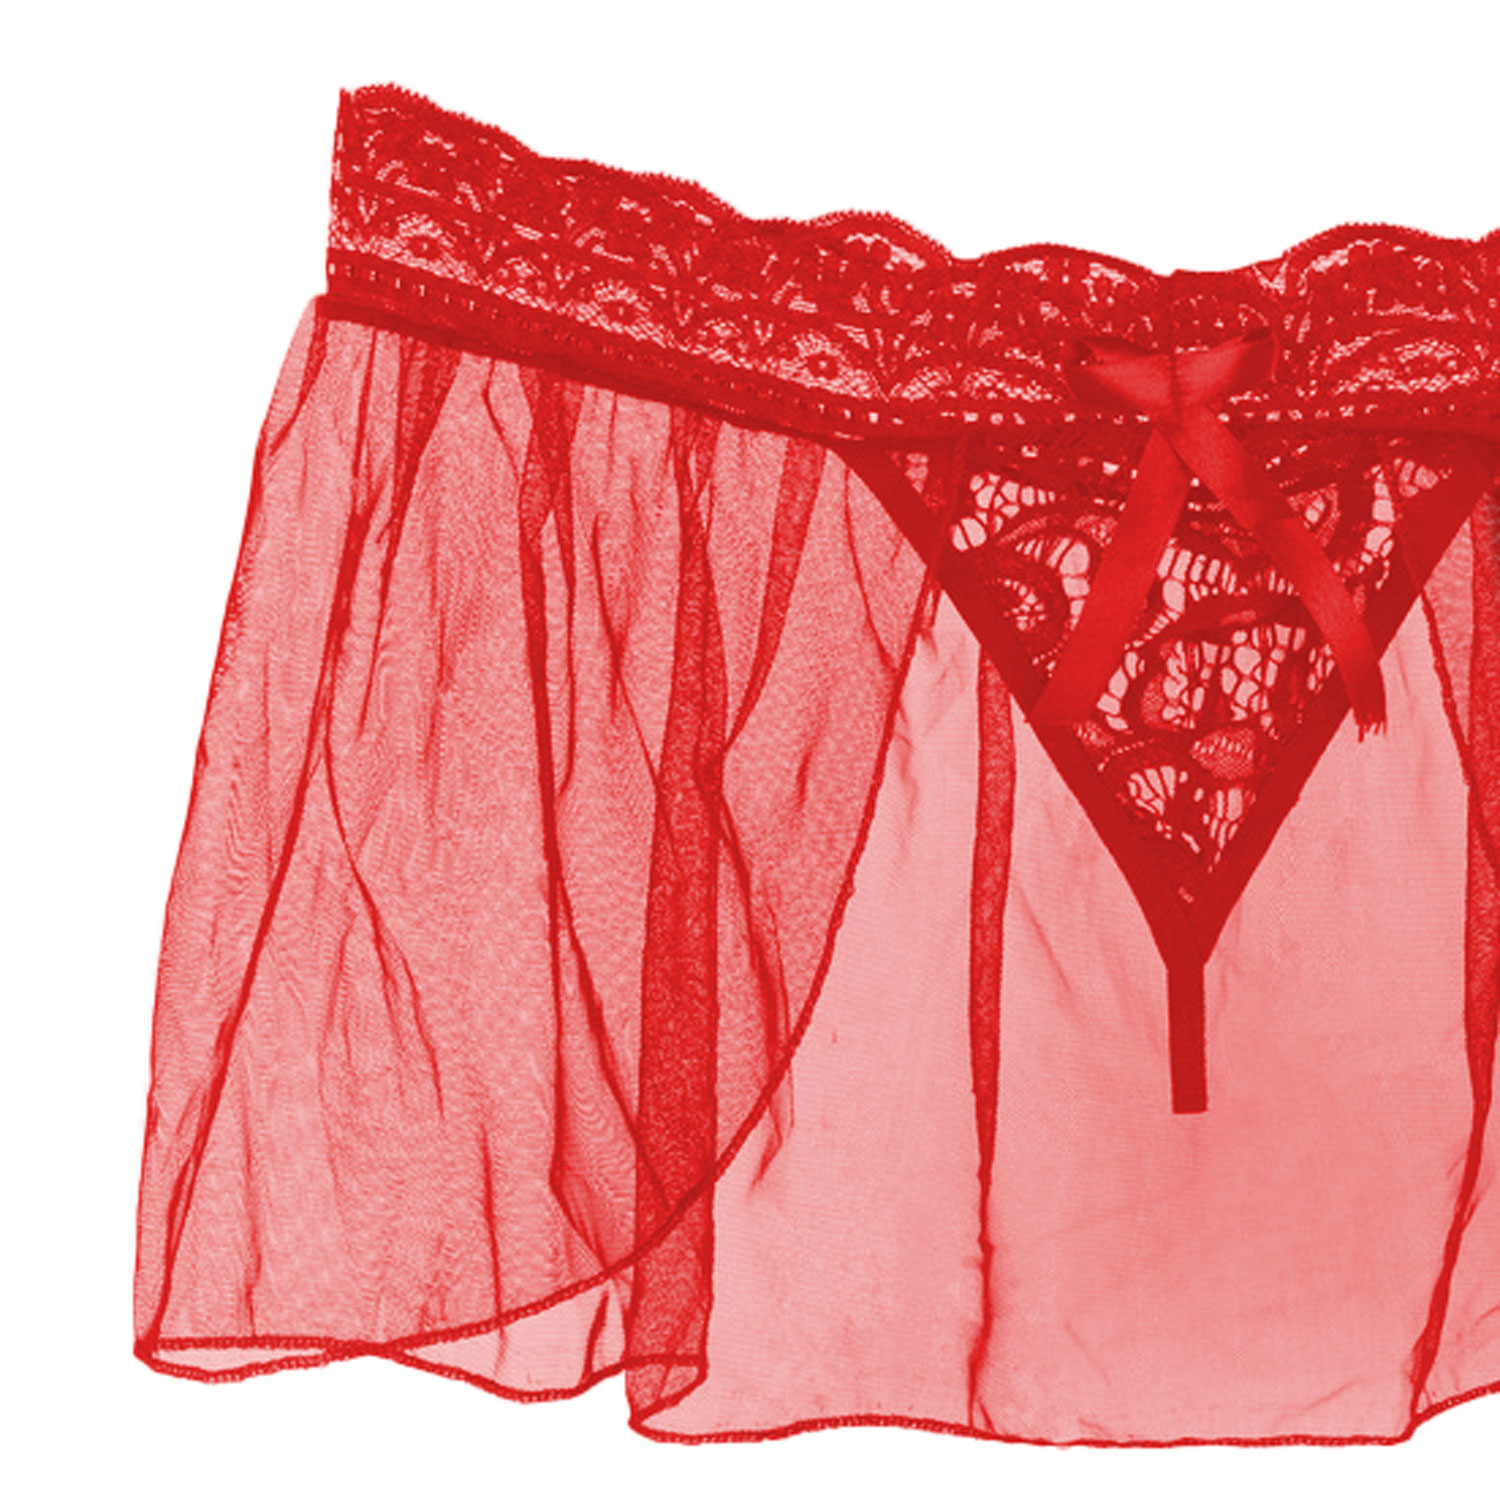 شورت زنانه شباهنگ مدل  Lace Skirt رنگ قرمز -  - 2